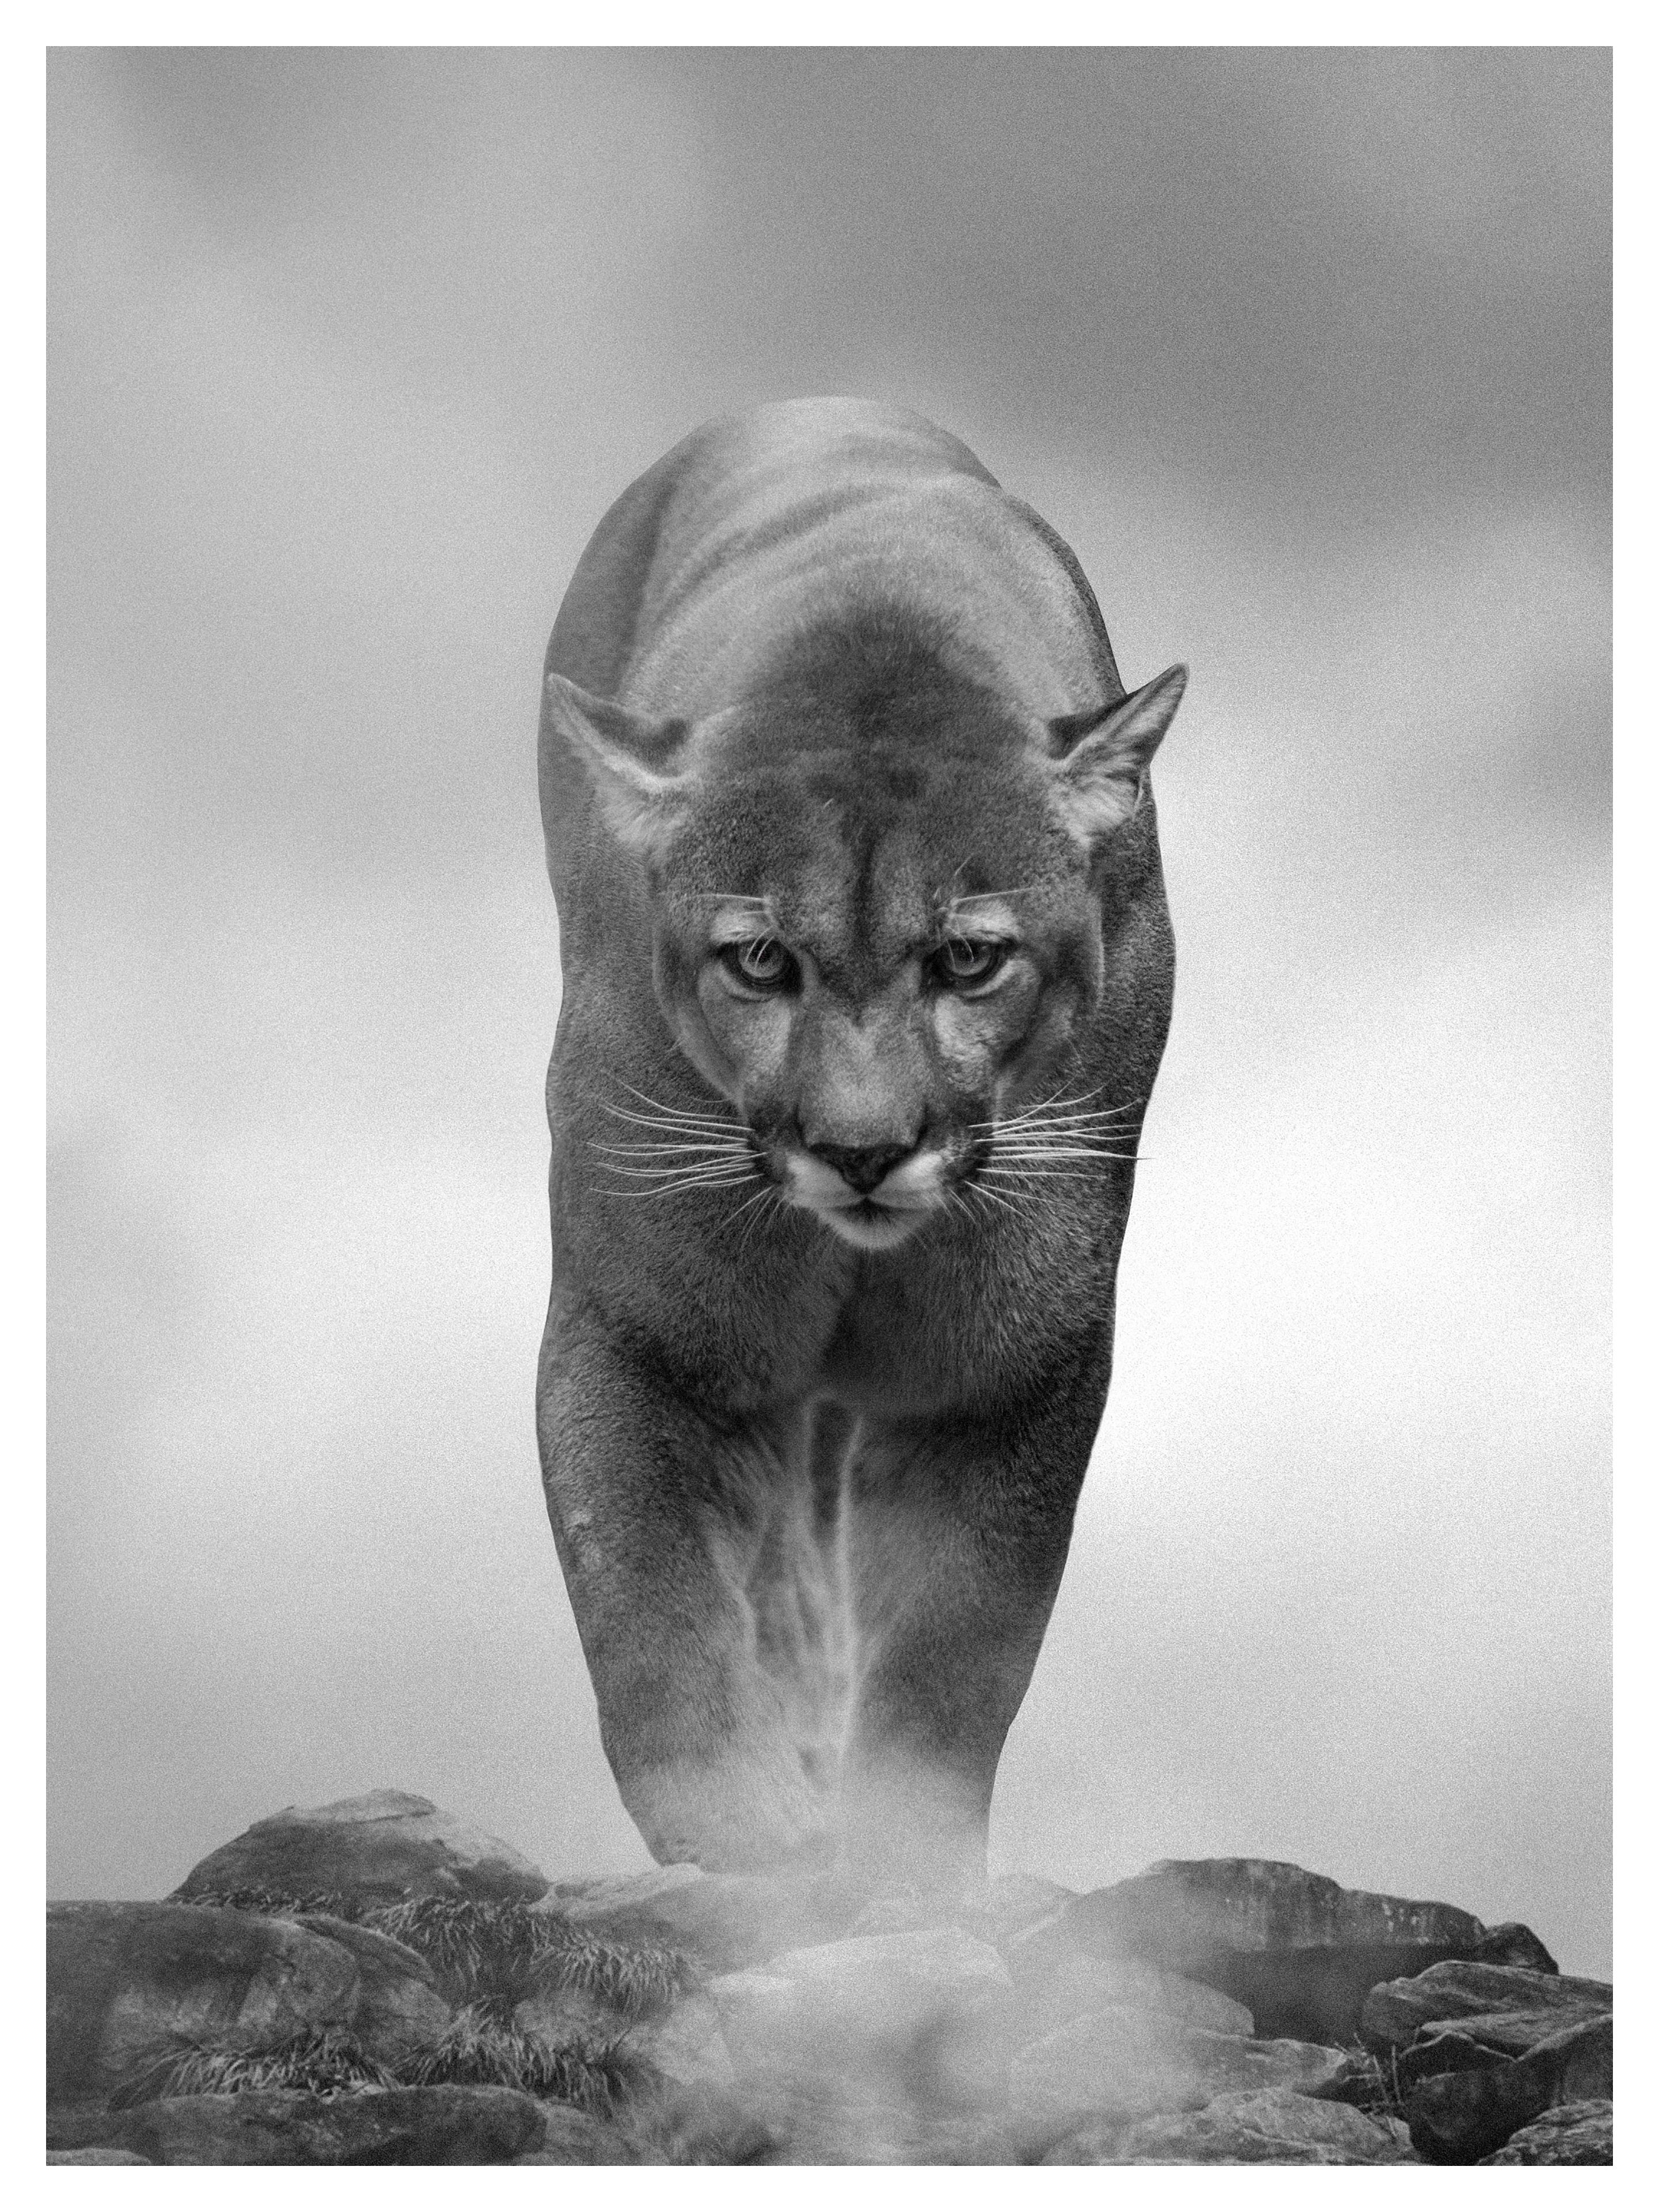 Shane Russeck Landscape Photograph -  36x48 Black and White Photography, Cougar Photograph, Mountain Lion Art